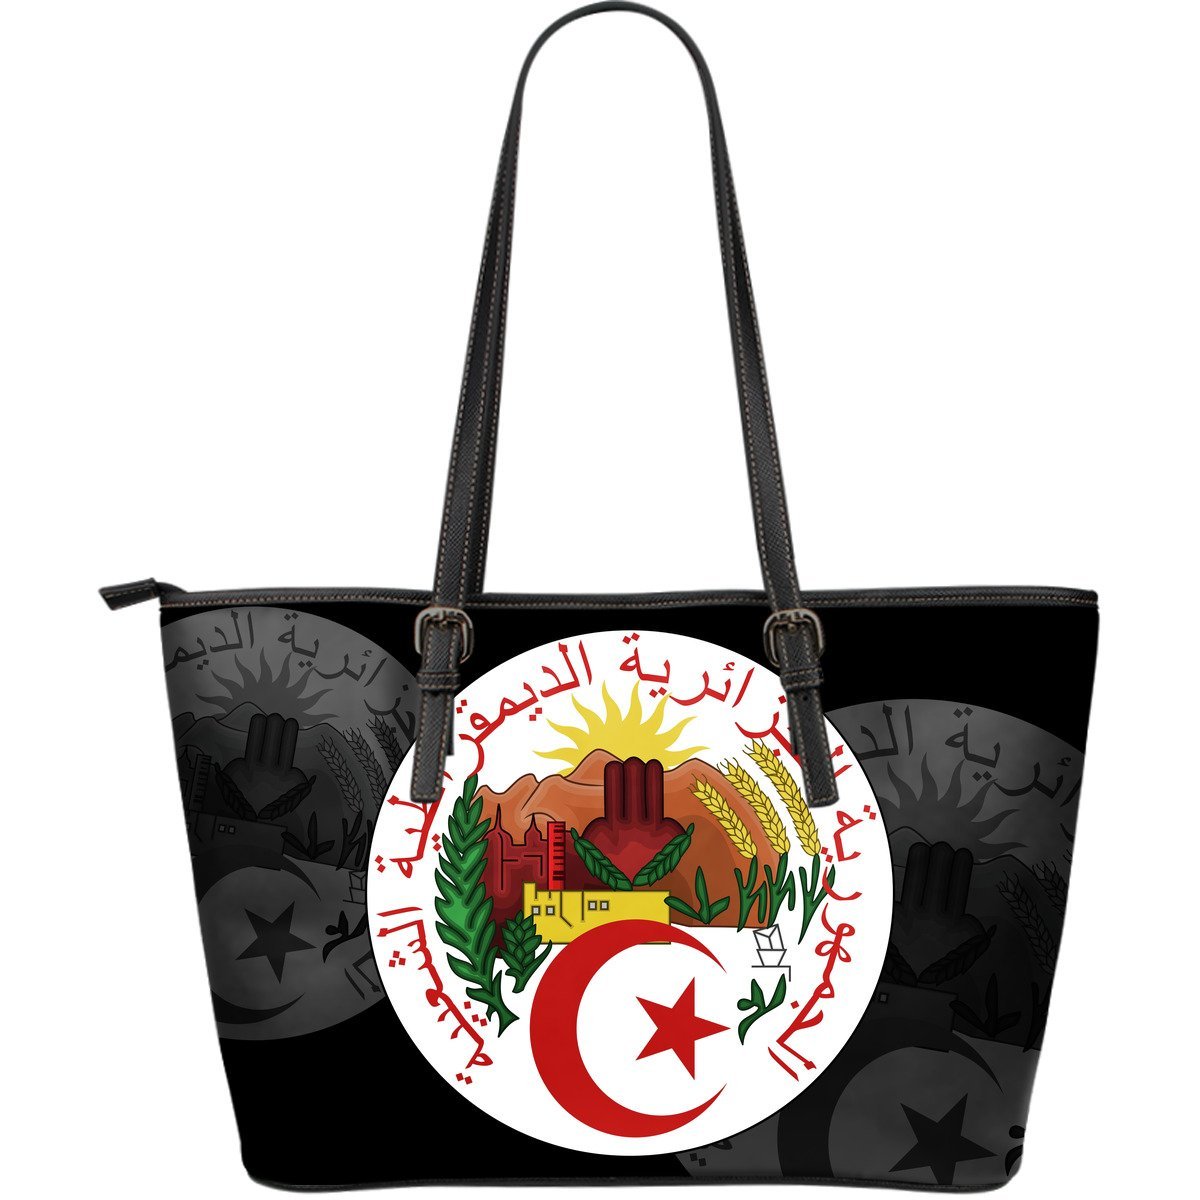 algeria-leather-tote-bag-large-size